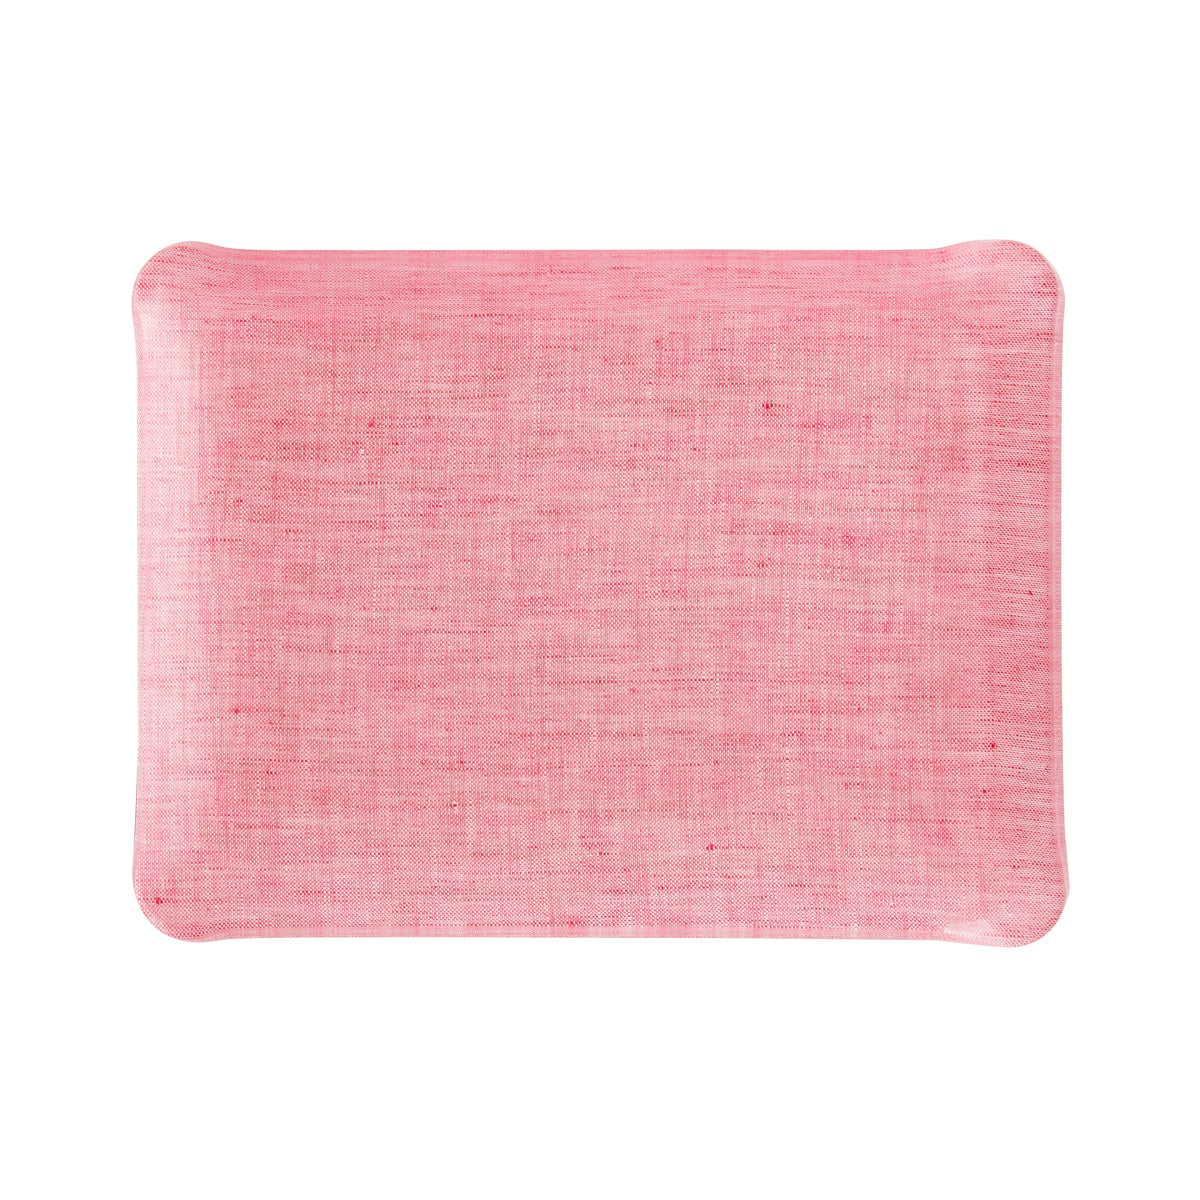 Nina Campbell Fabric Tray Small - Pink Sapphire